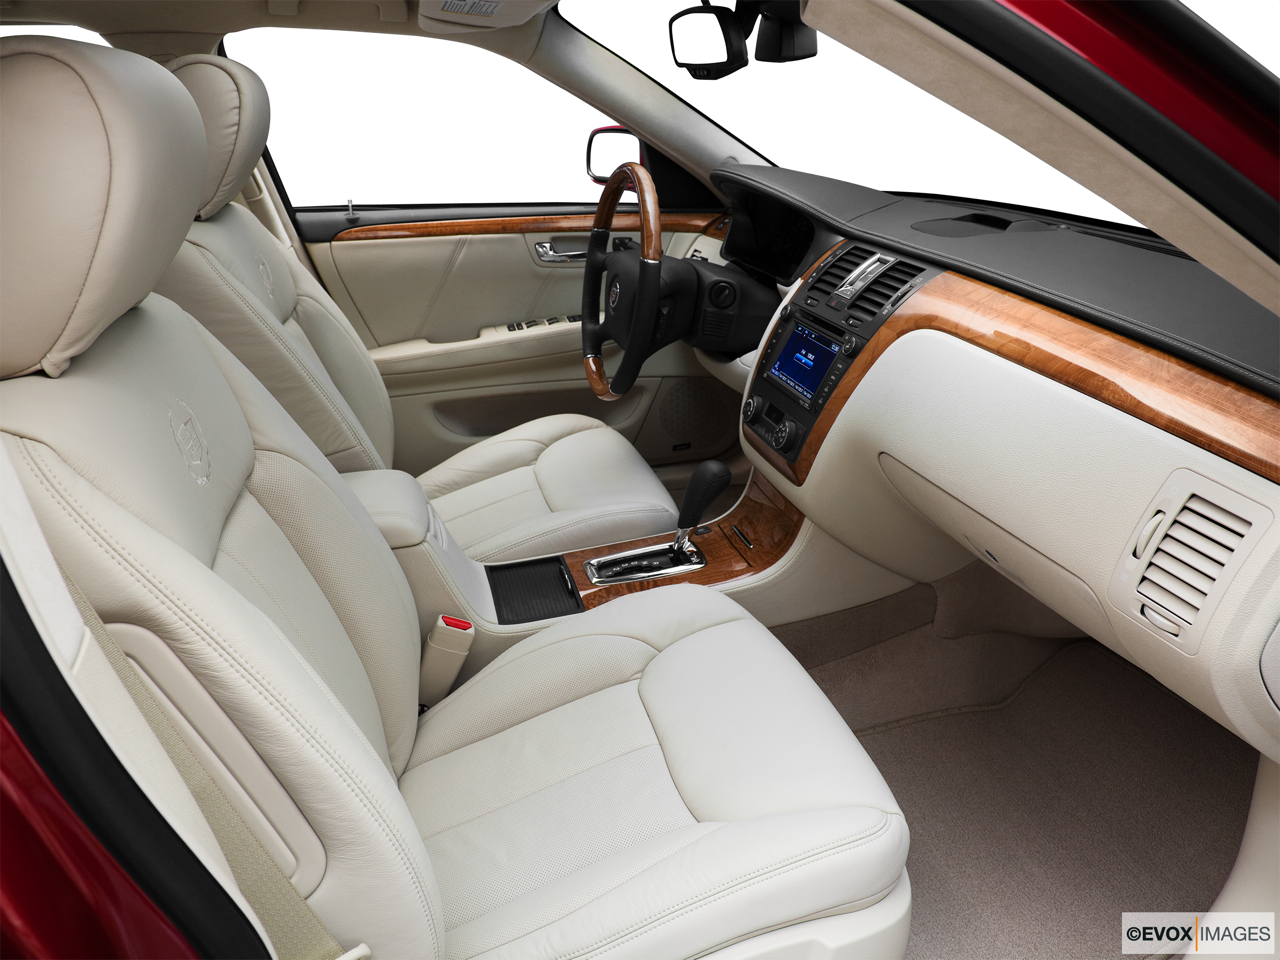 2011 Cadillac DTS Platinum Passenger seat. 